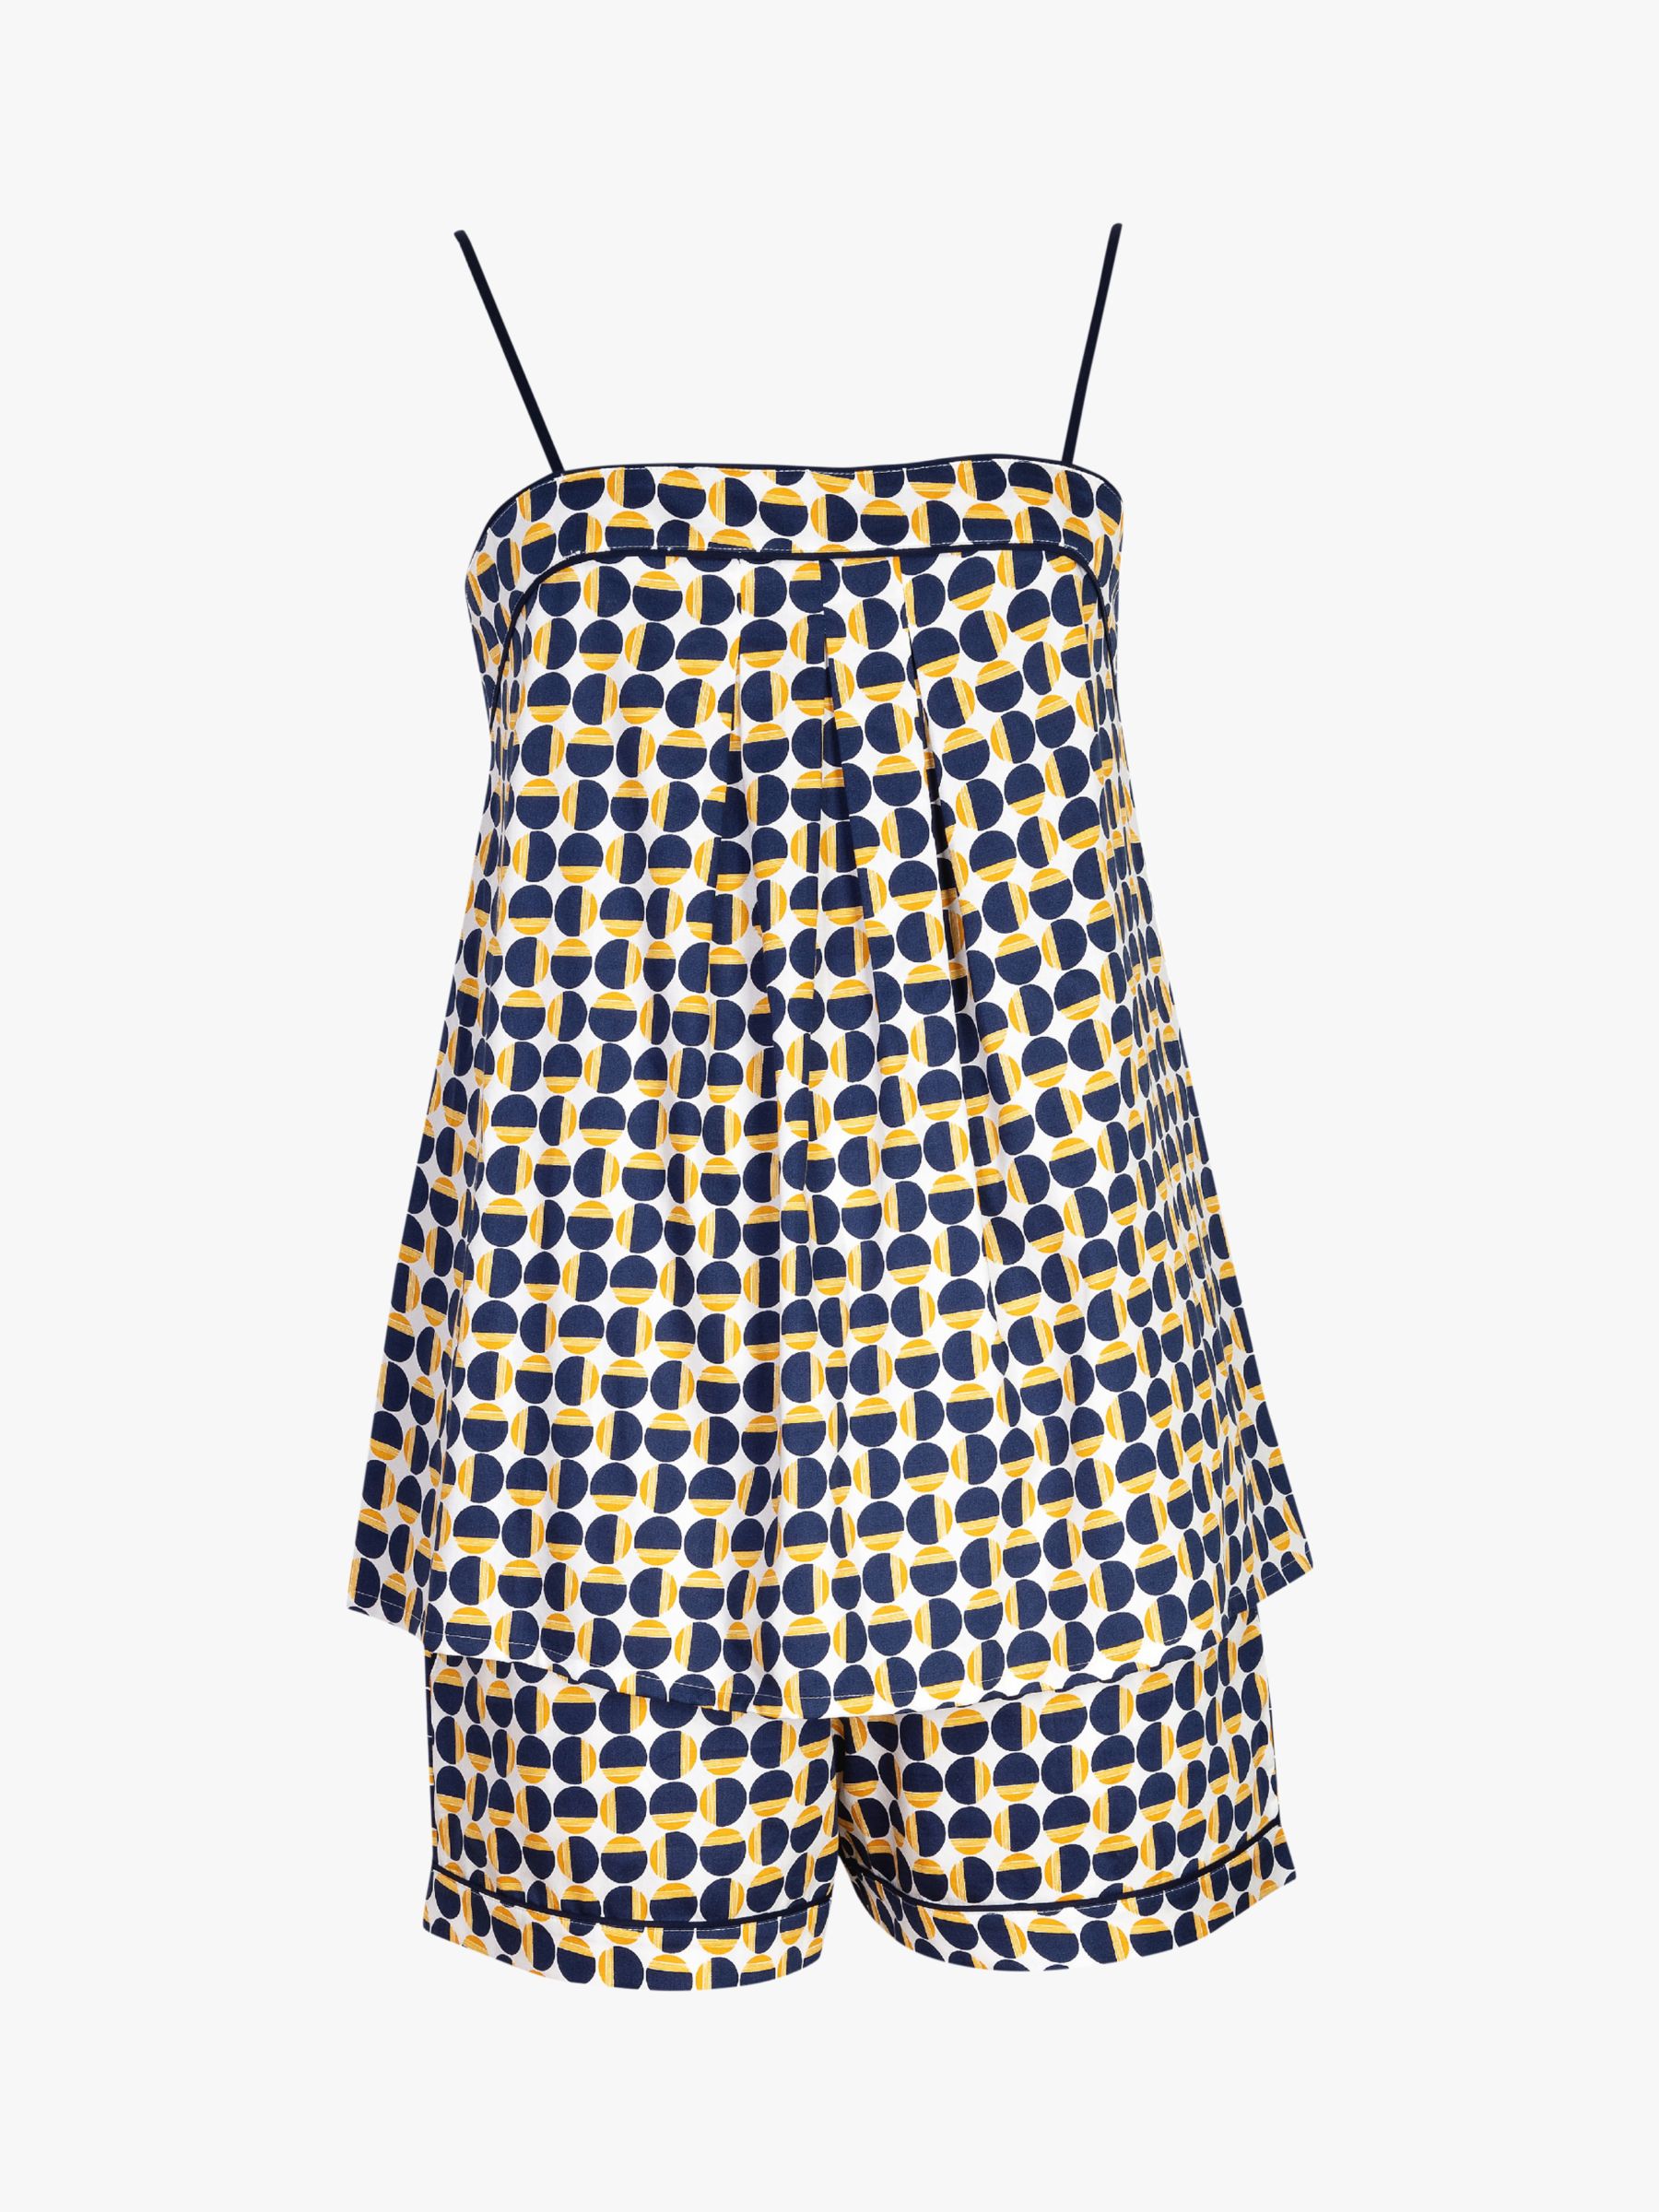 Buy Fable & Eve Chelsea Geometric Cami Shorts Pyjama Set, Blue/Multi Online at johnlewis.com